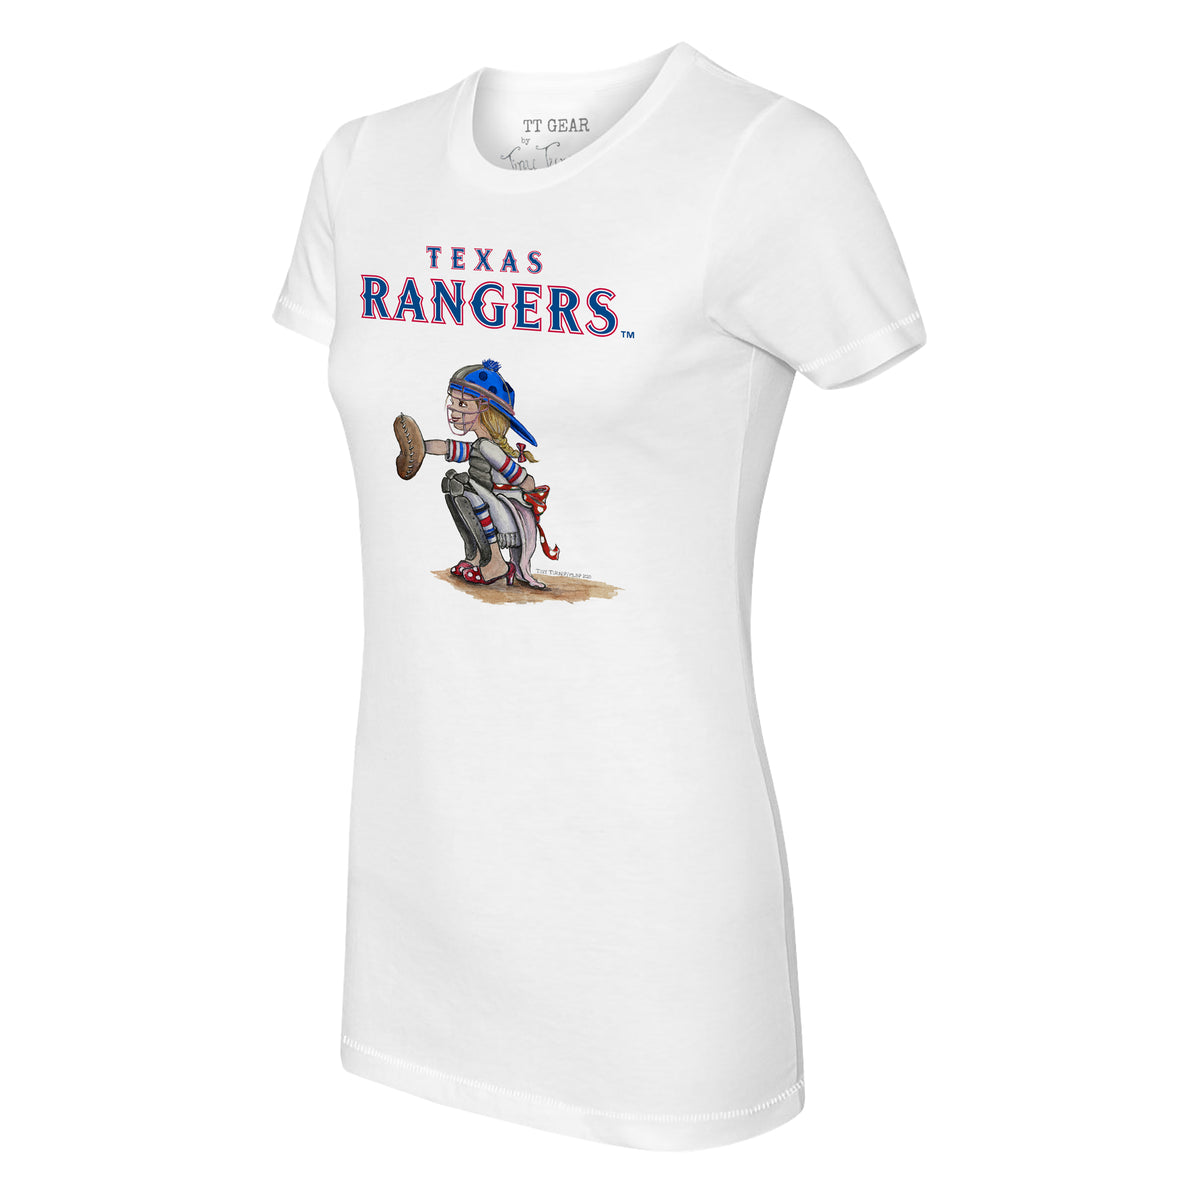 Texas Rangers Kate the Catcher Tee Shirt